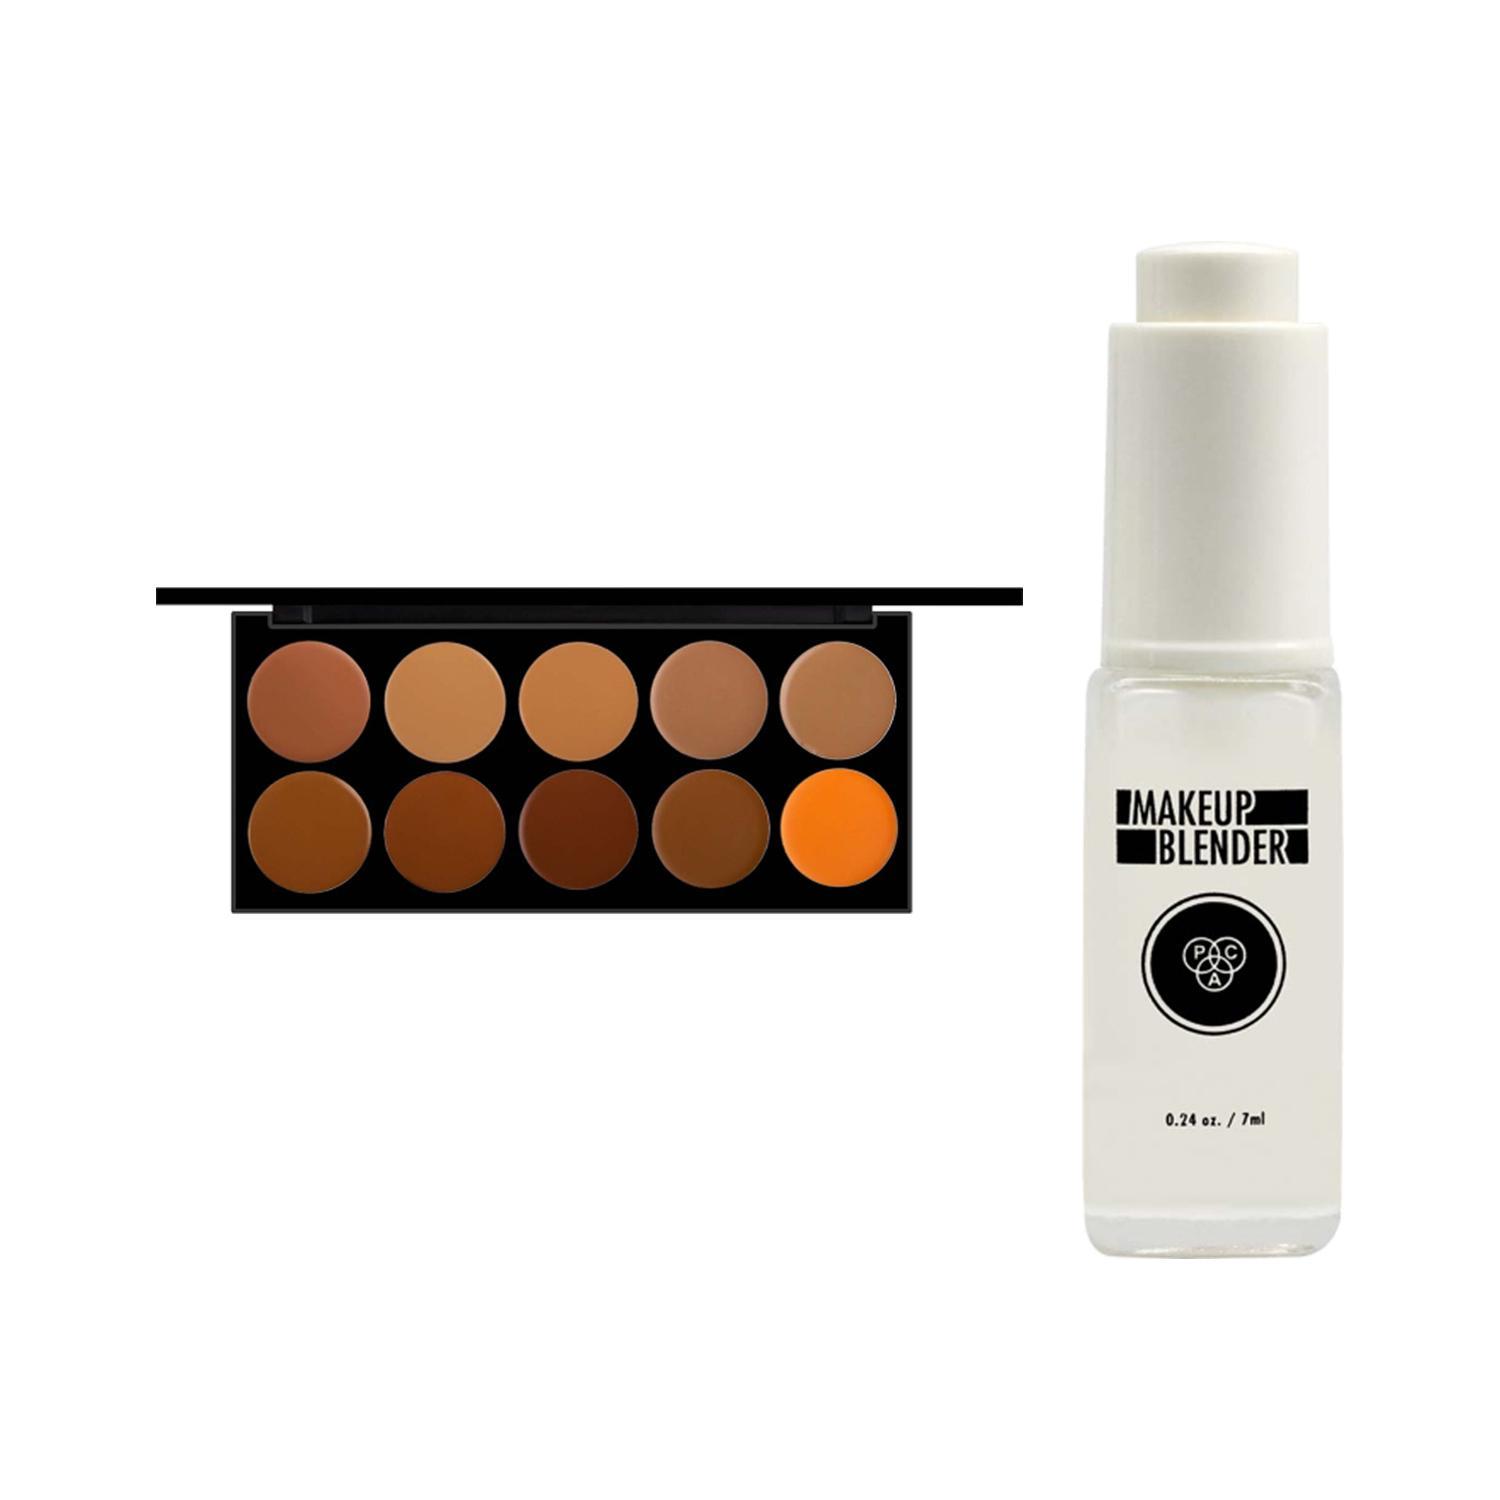 pac ultra studio hd cream foundation x10 & makeup blender combo